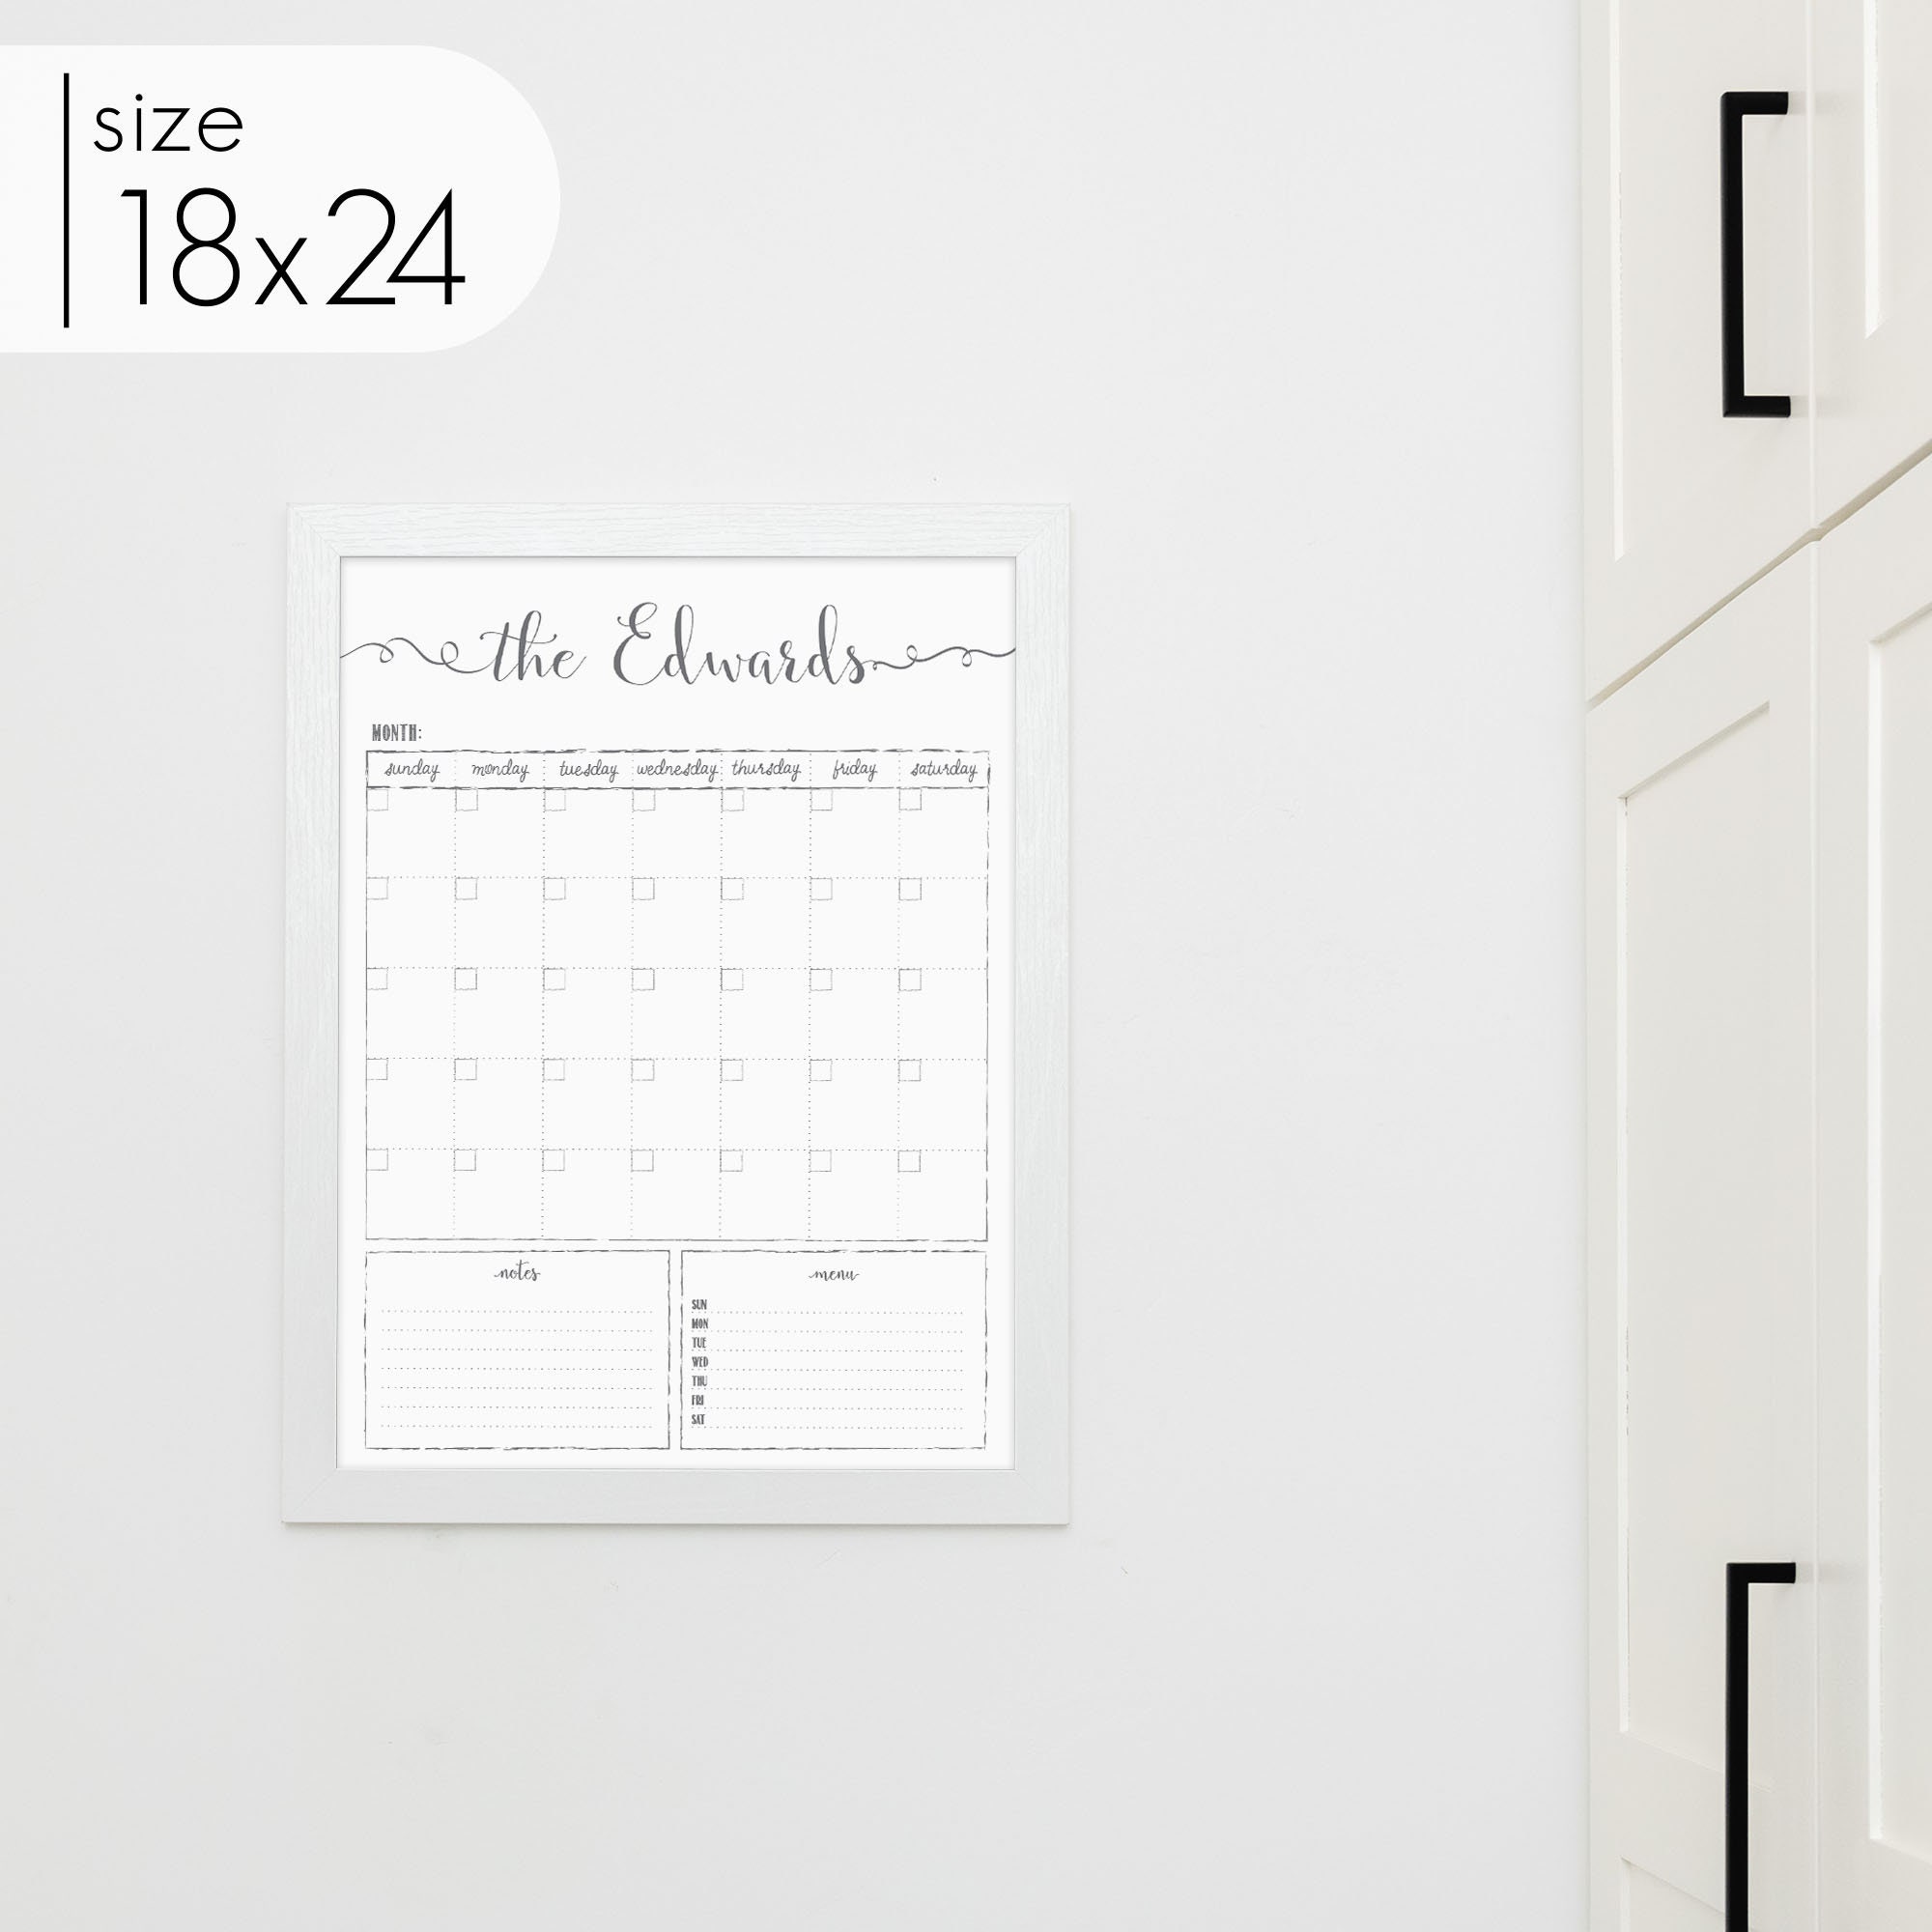 Monthly Framed Chalkboard Calendar + 4 sections | Vertical Knope